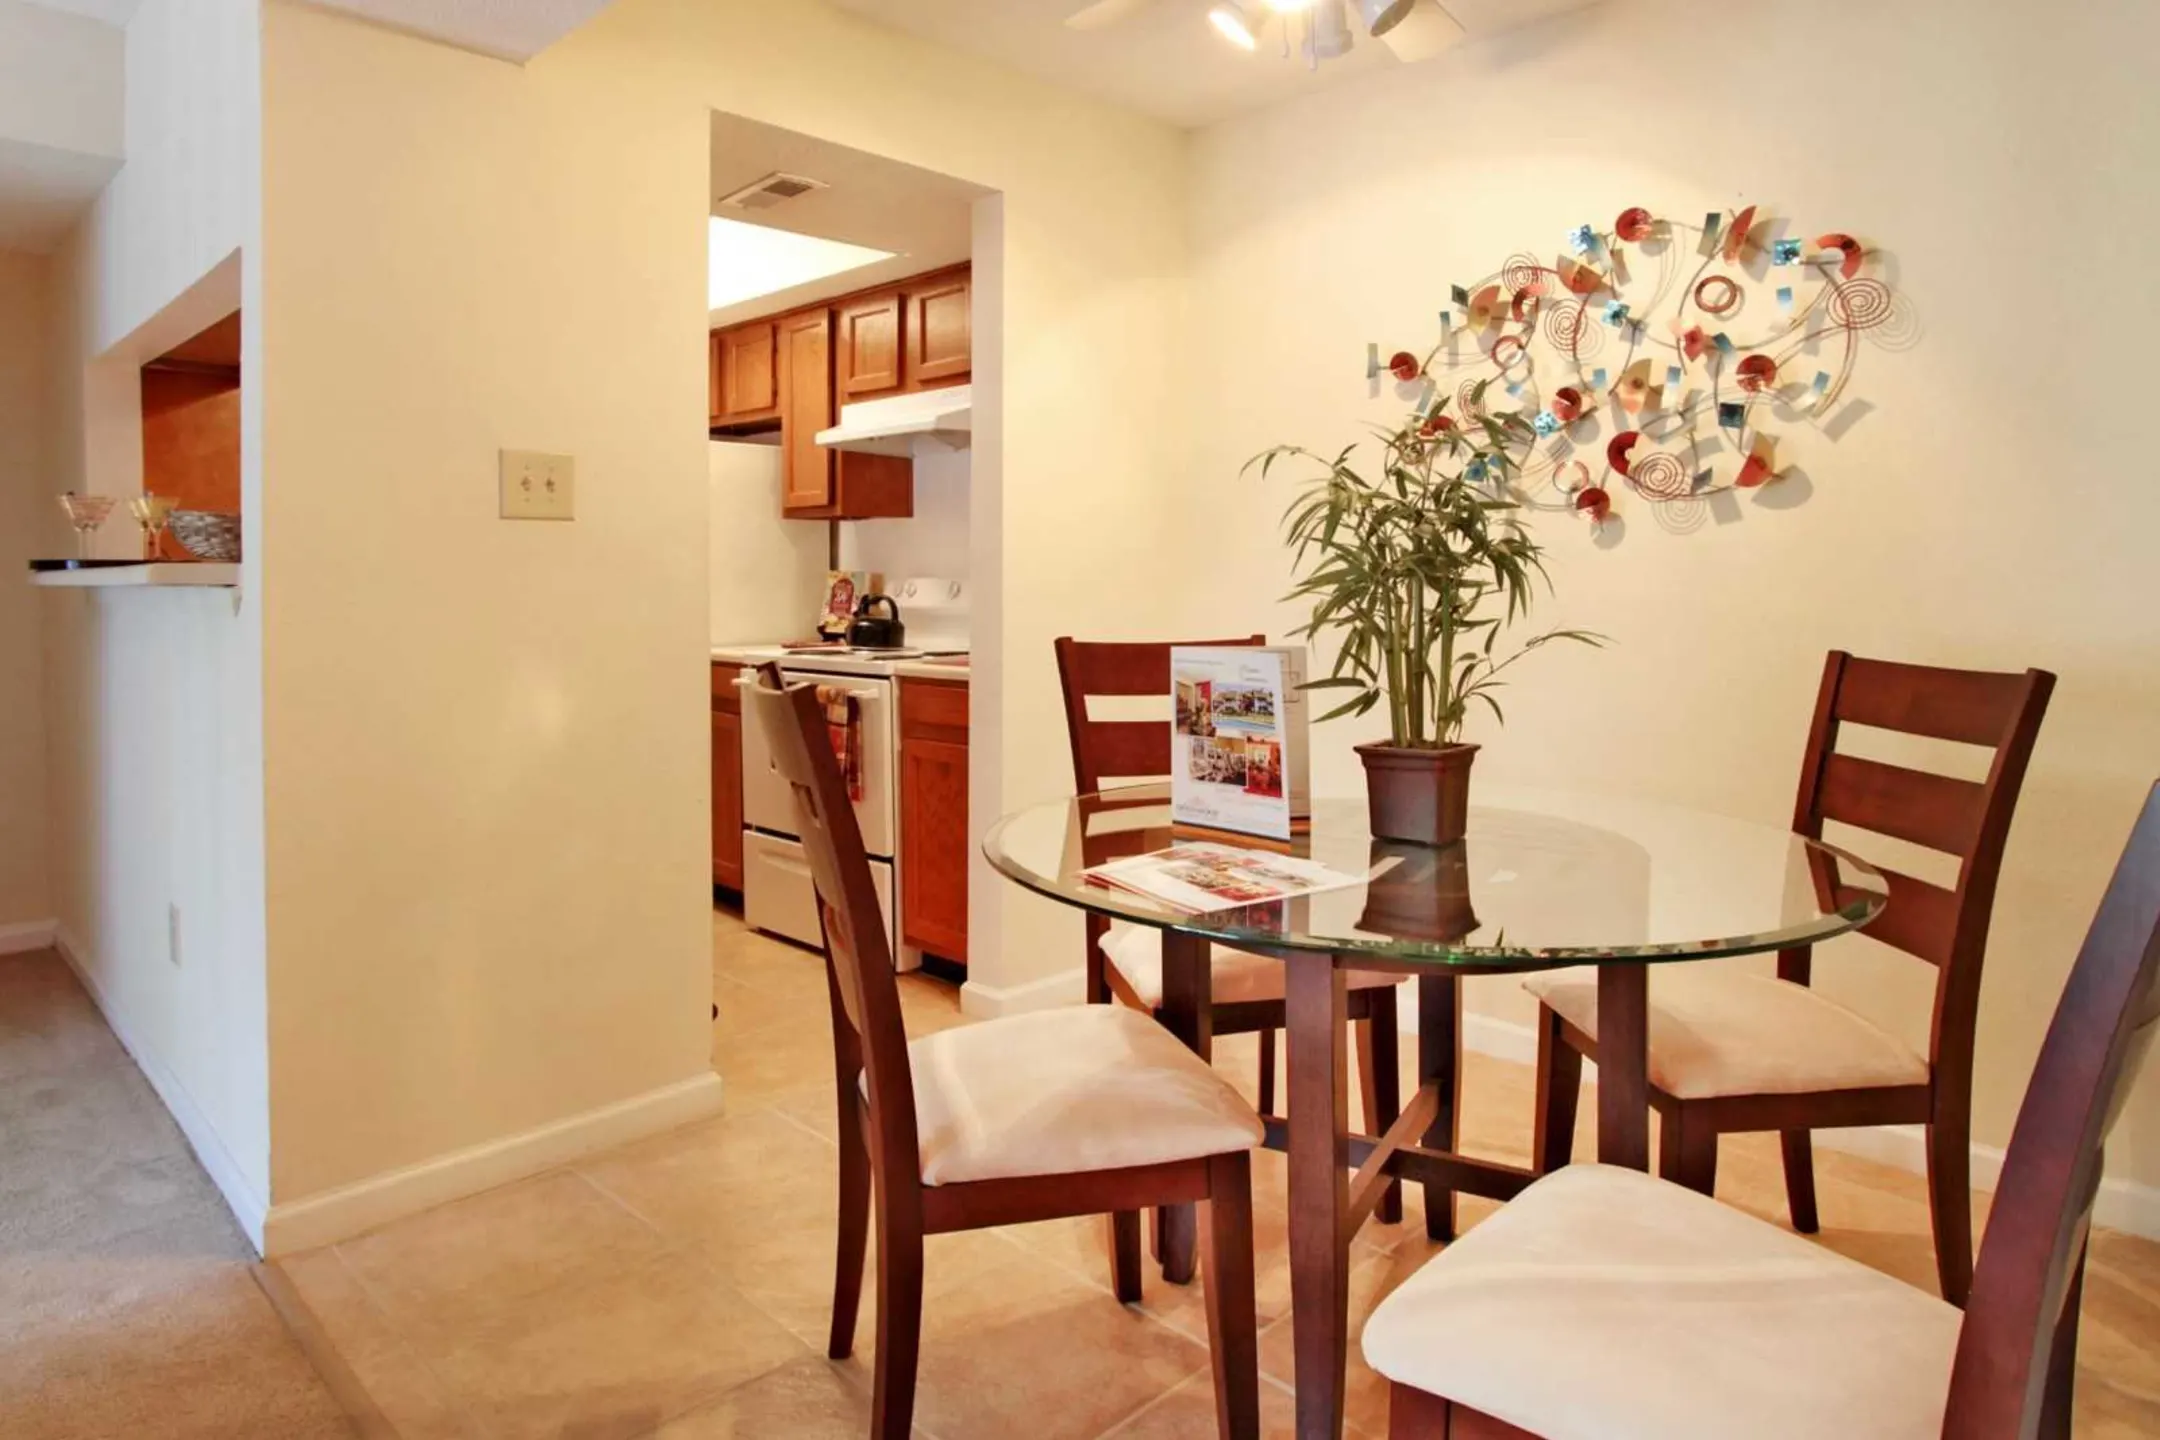 Dining Room - Devonwood Apartment Homes - Charlotte, NC